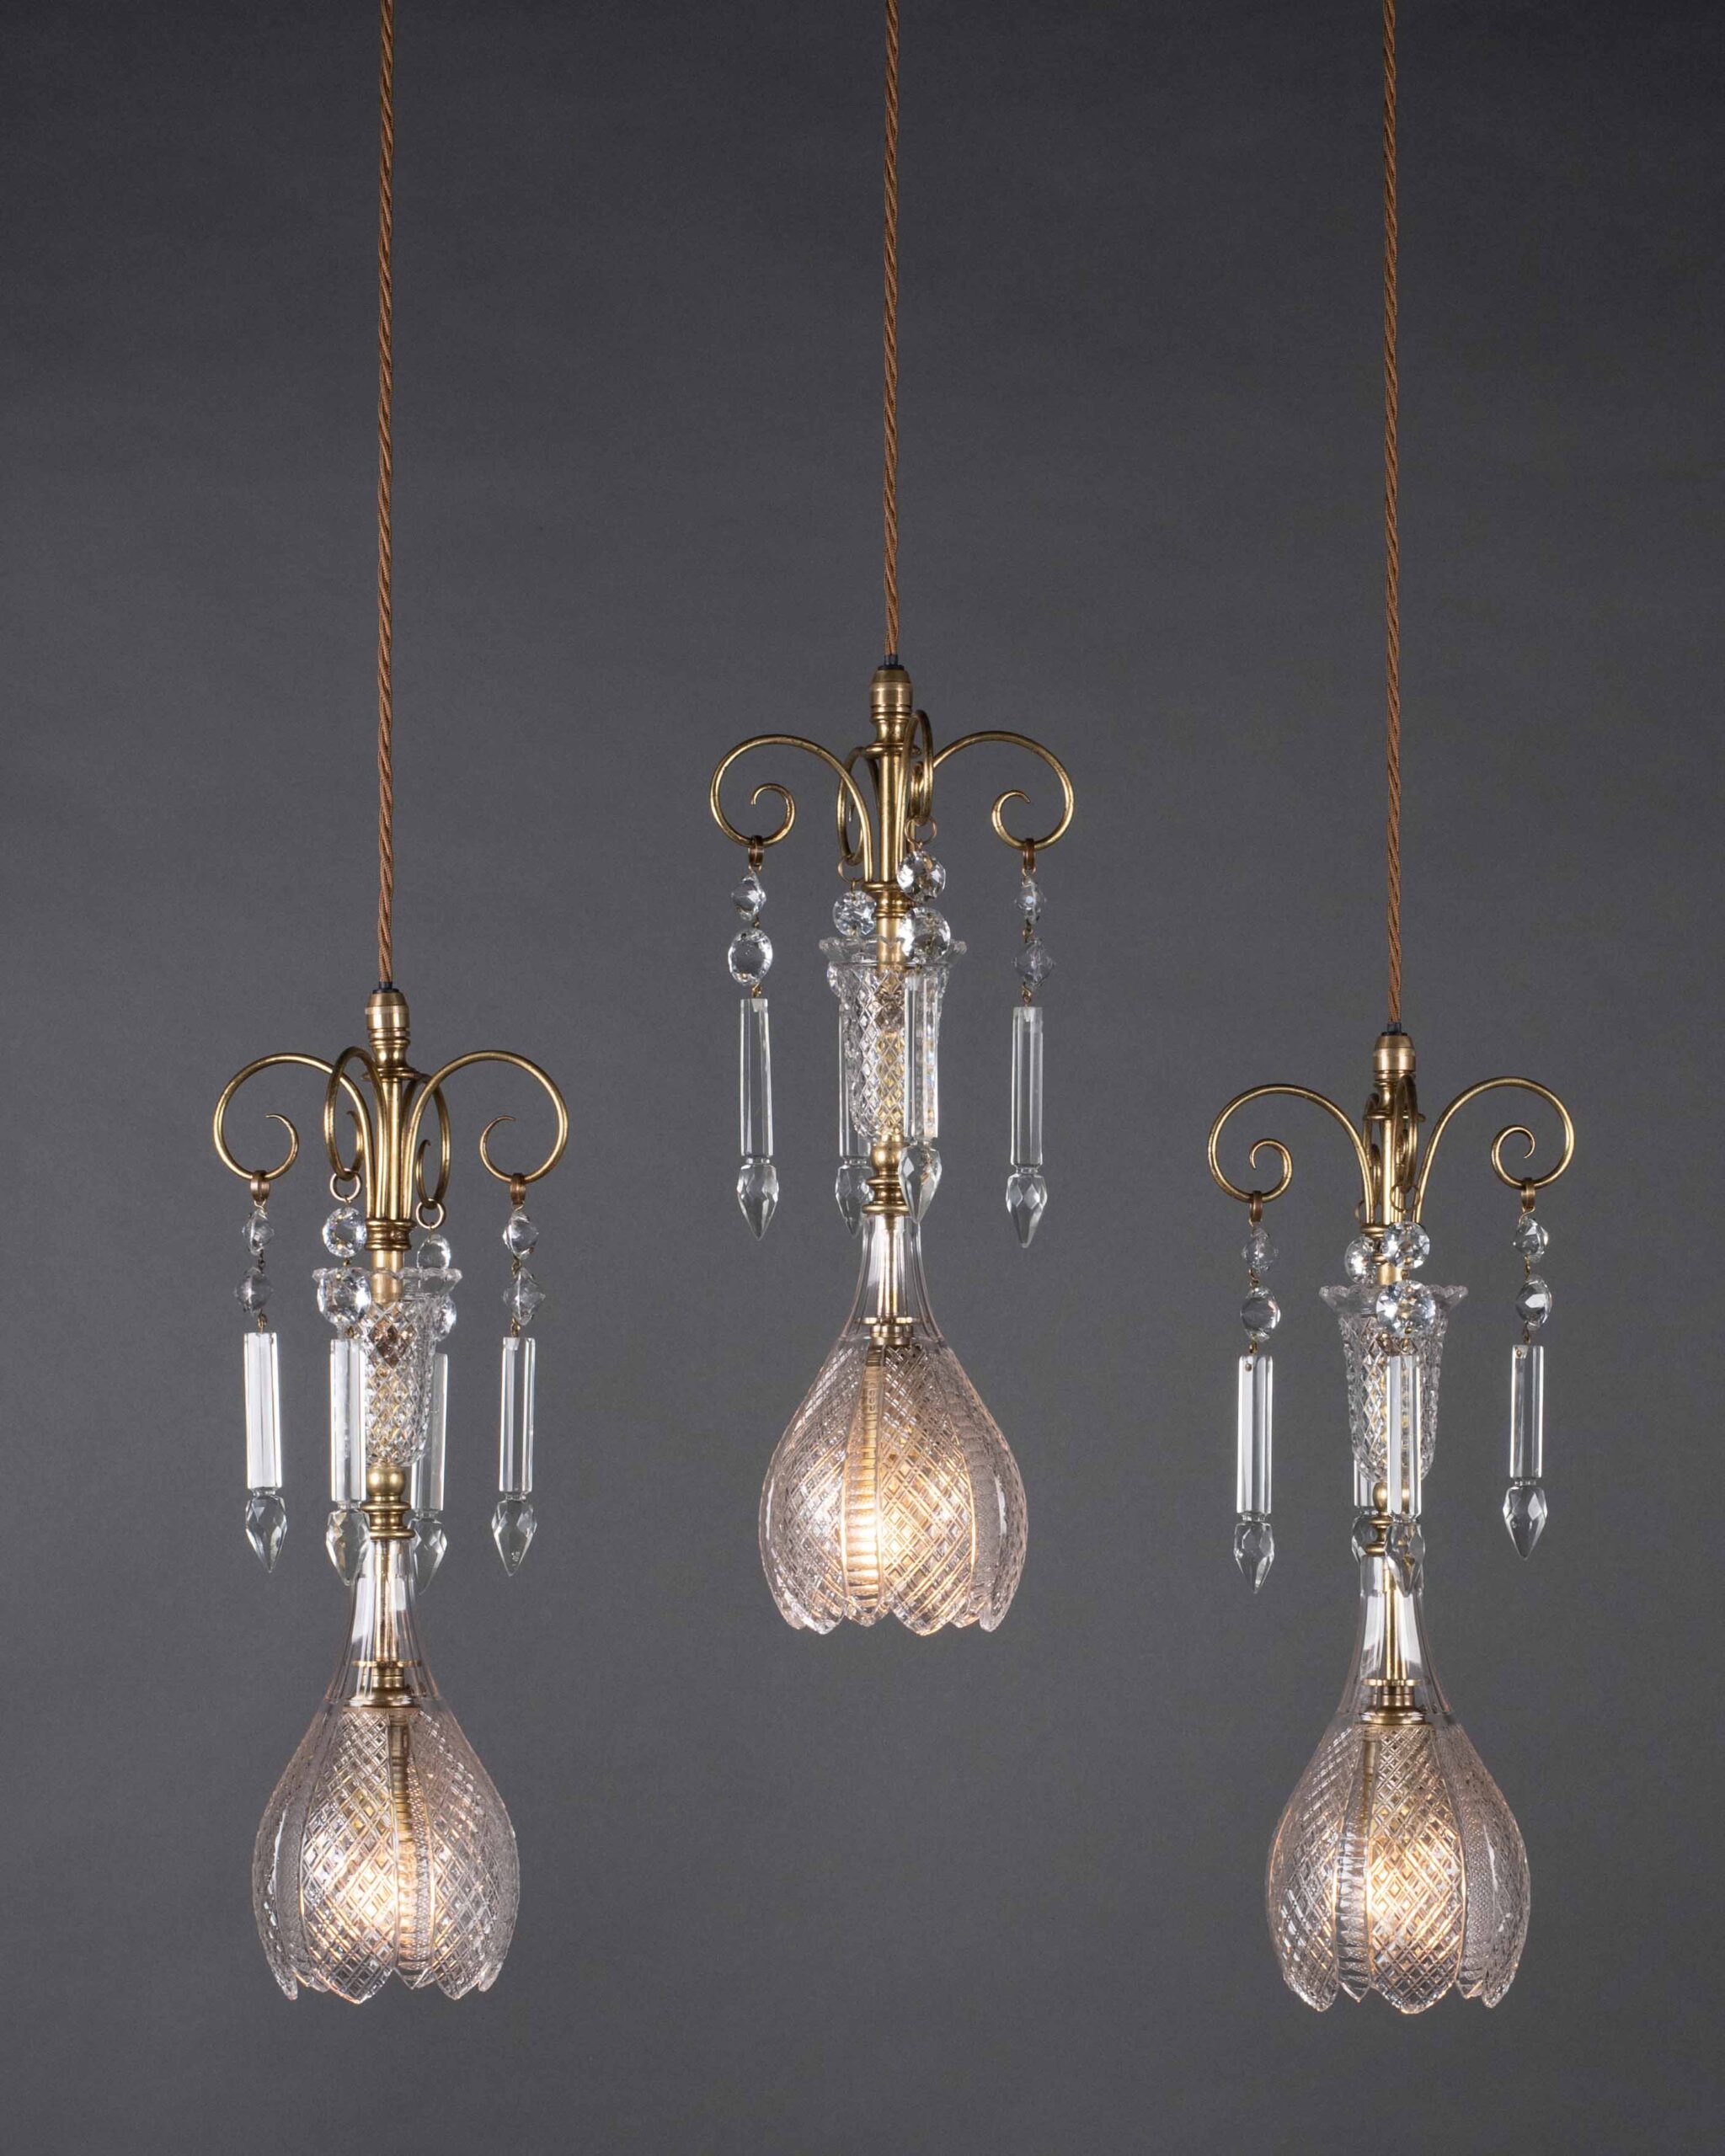 Set of 3 antique crystal pendant lights by F & C Osler